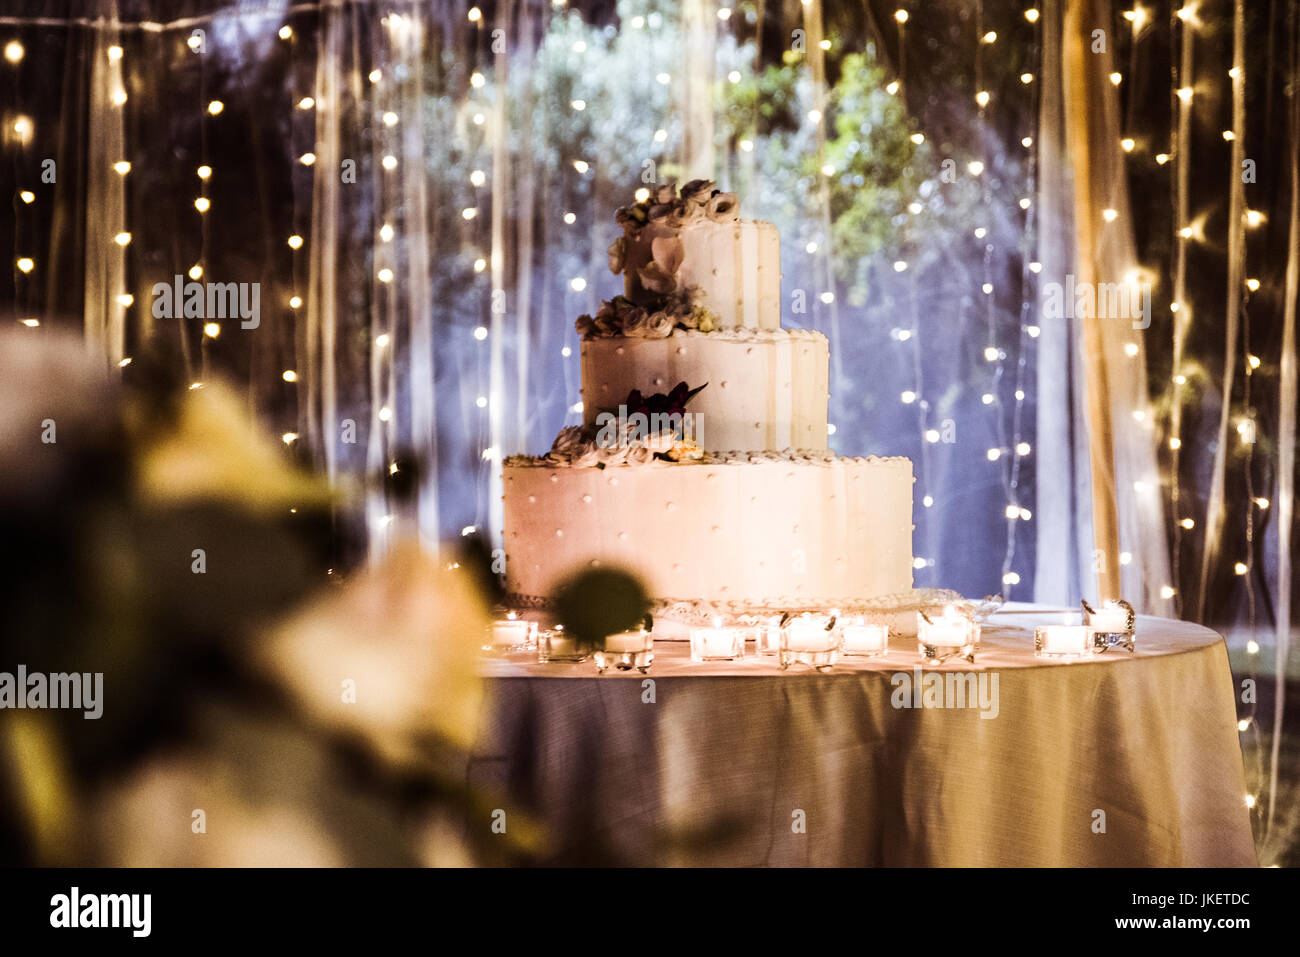 wedding decorations and cake Stock Photo